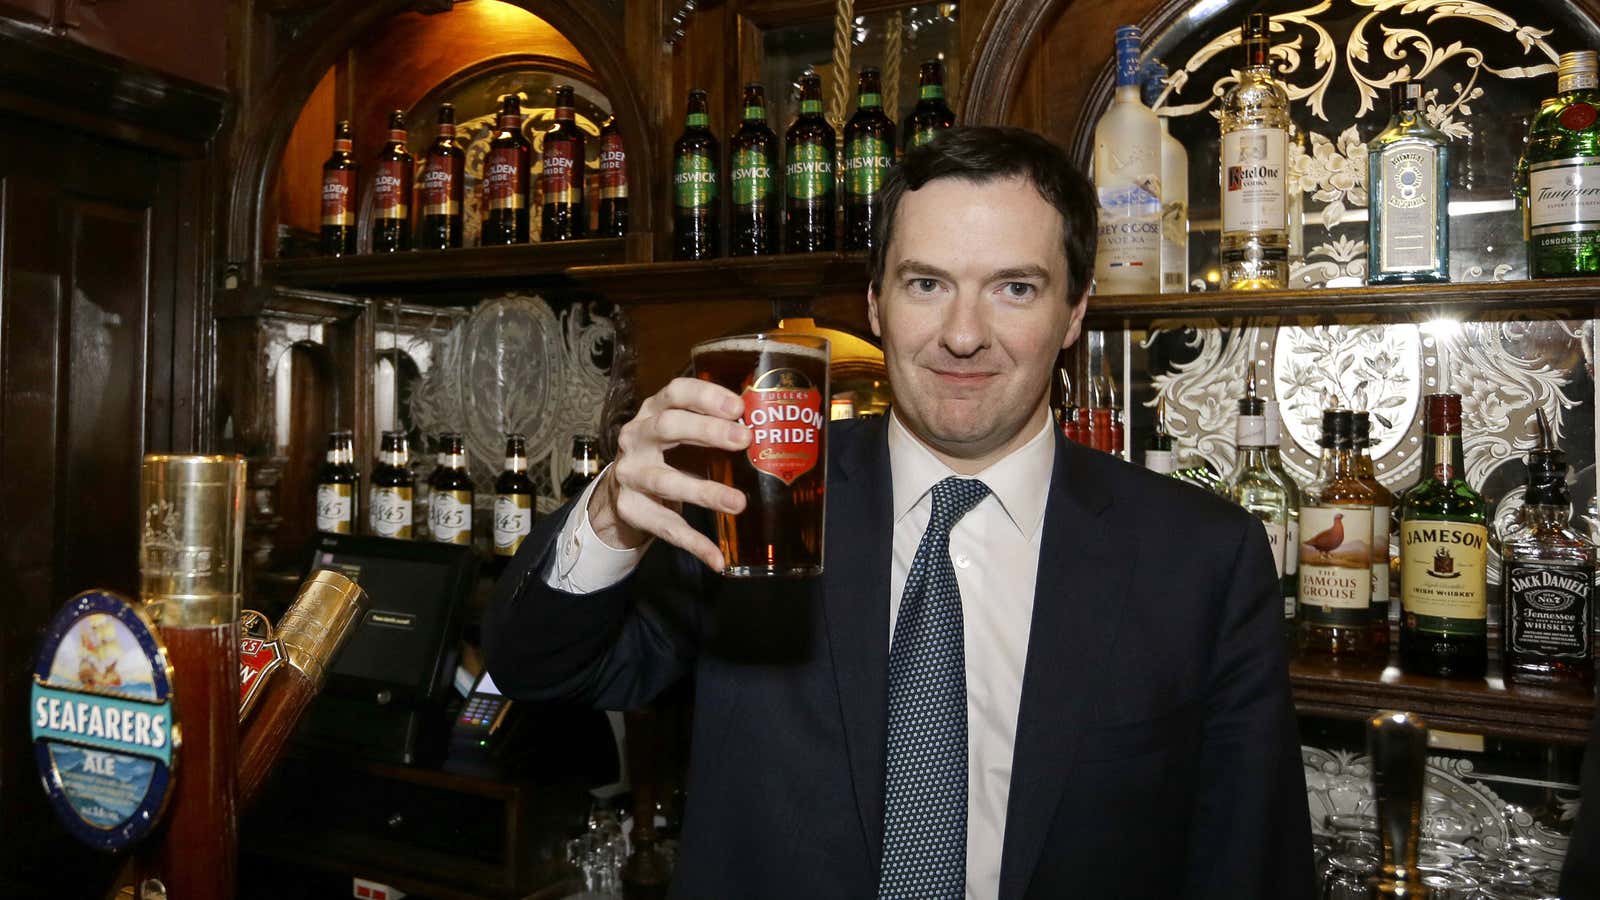 UK chancellor George Osborne prefers bitter to Bordeaux.